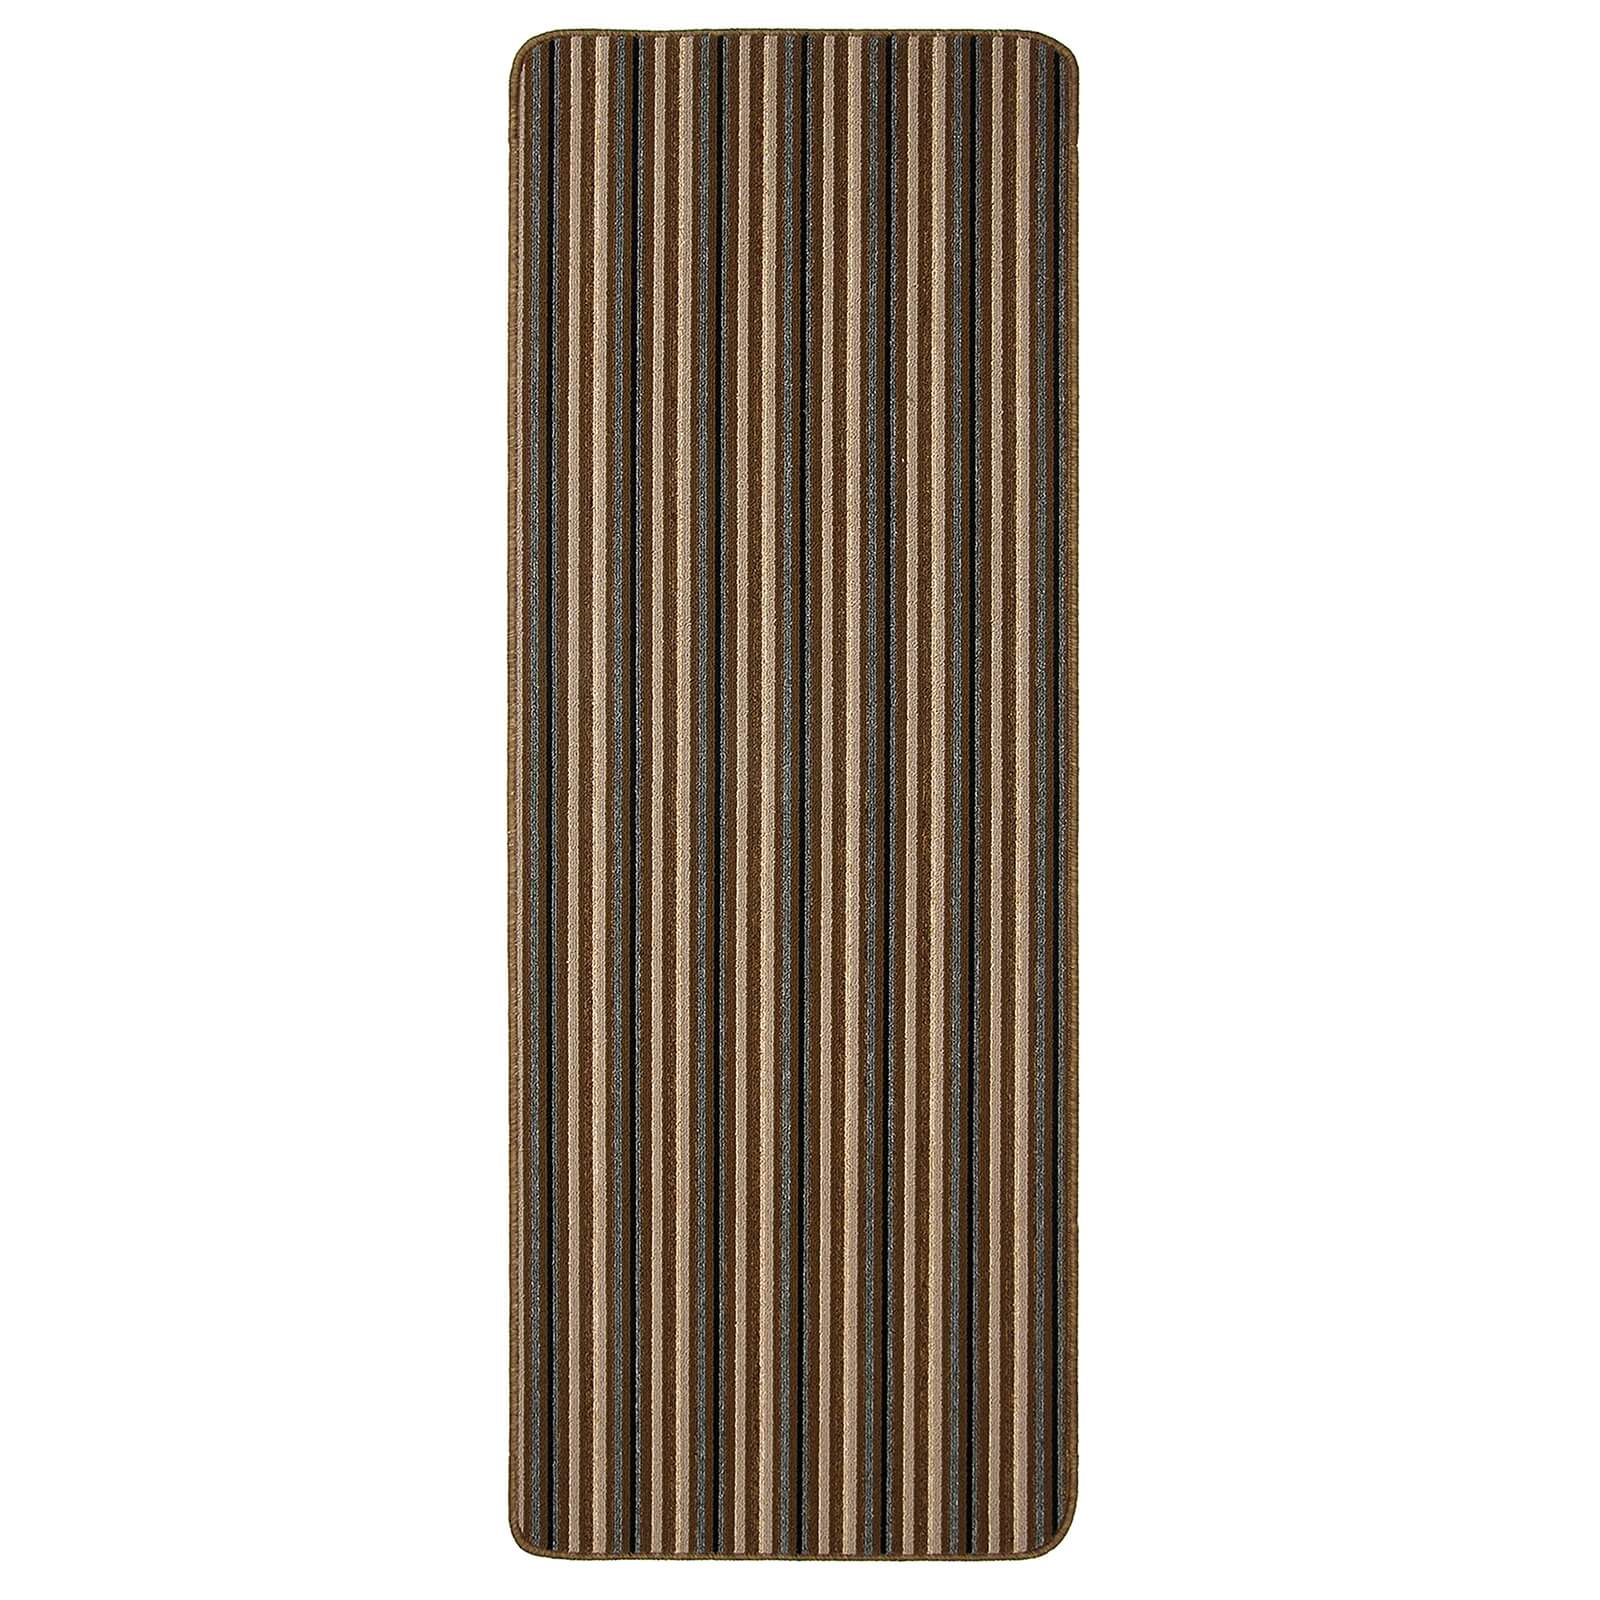 Java Washable Stripe Runner - Chocolate - 67x180cm